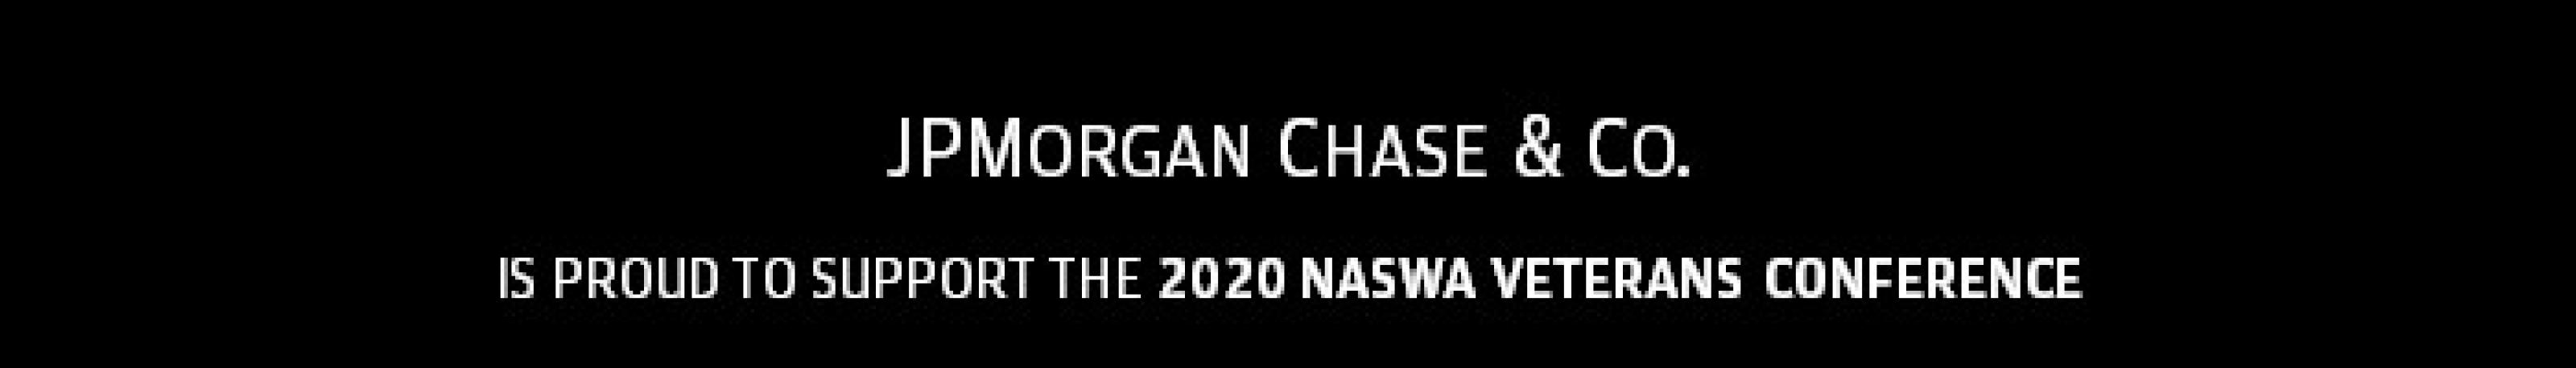 JPMorgan Chase Sponsor Ad 2020 Veterans Conference